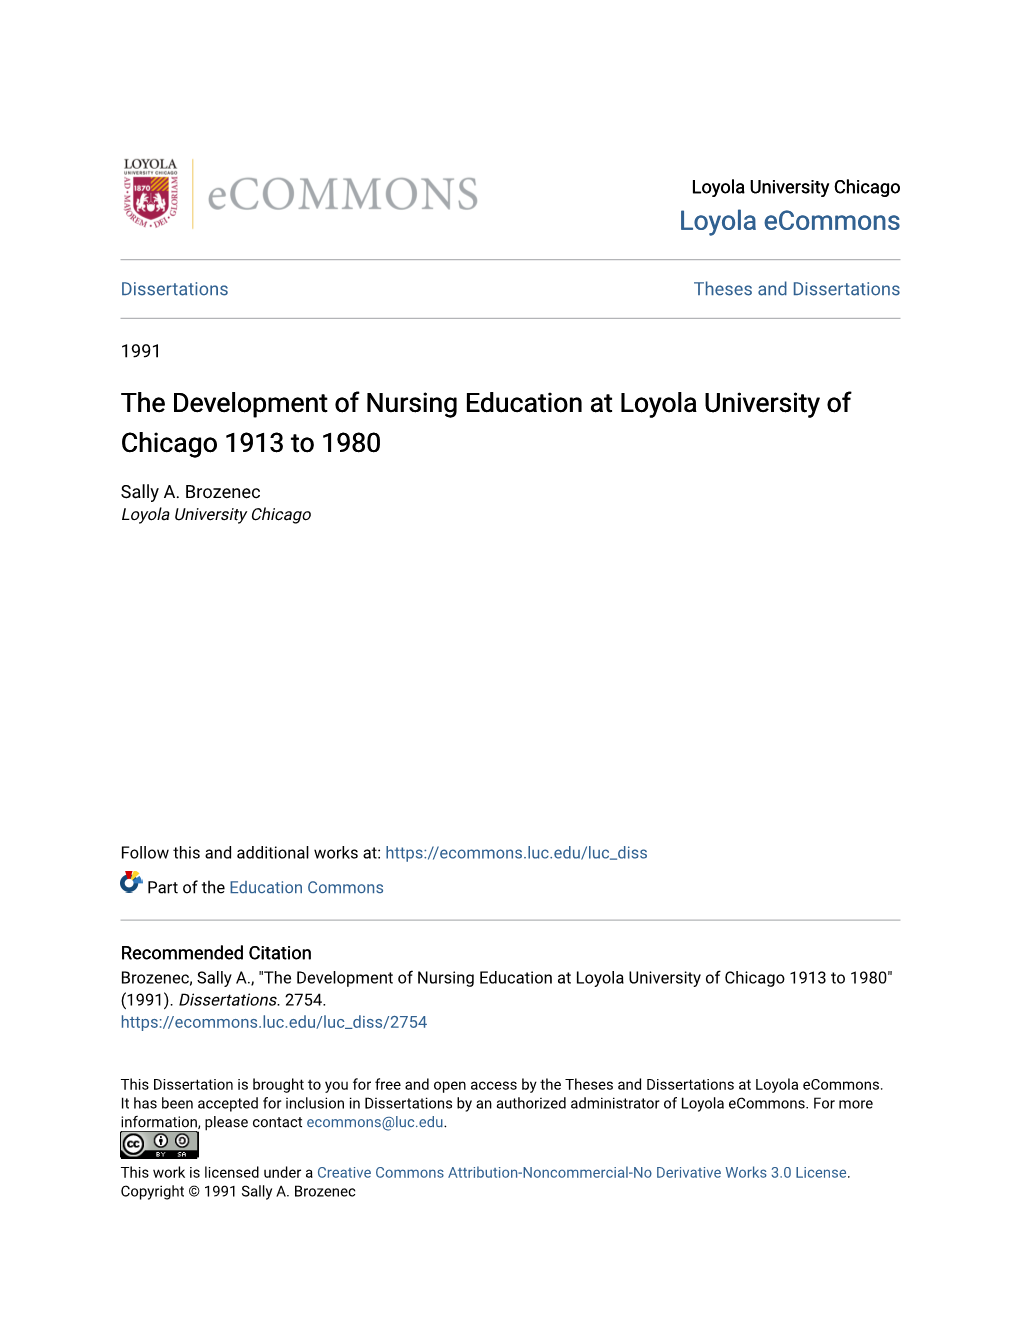 The Development of Nursing Education at Loyola University of Chicago 1913 to 1980